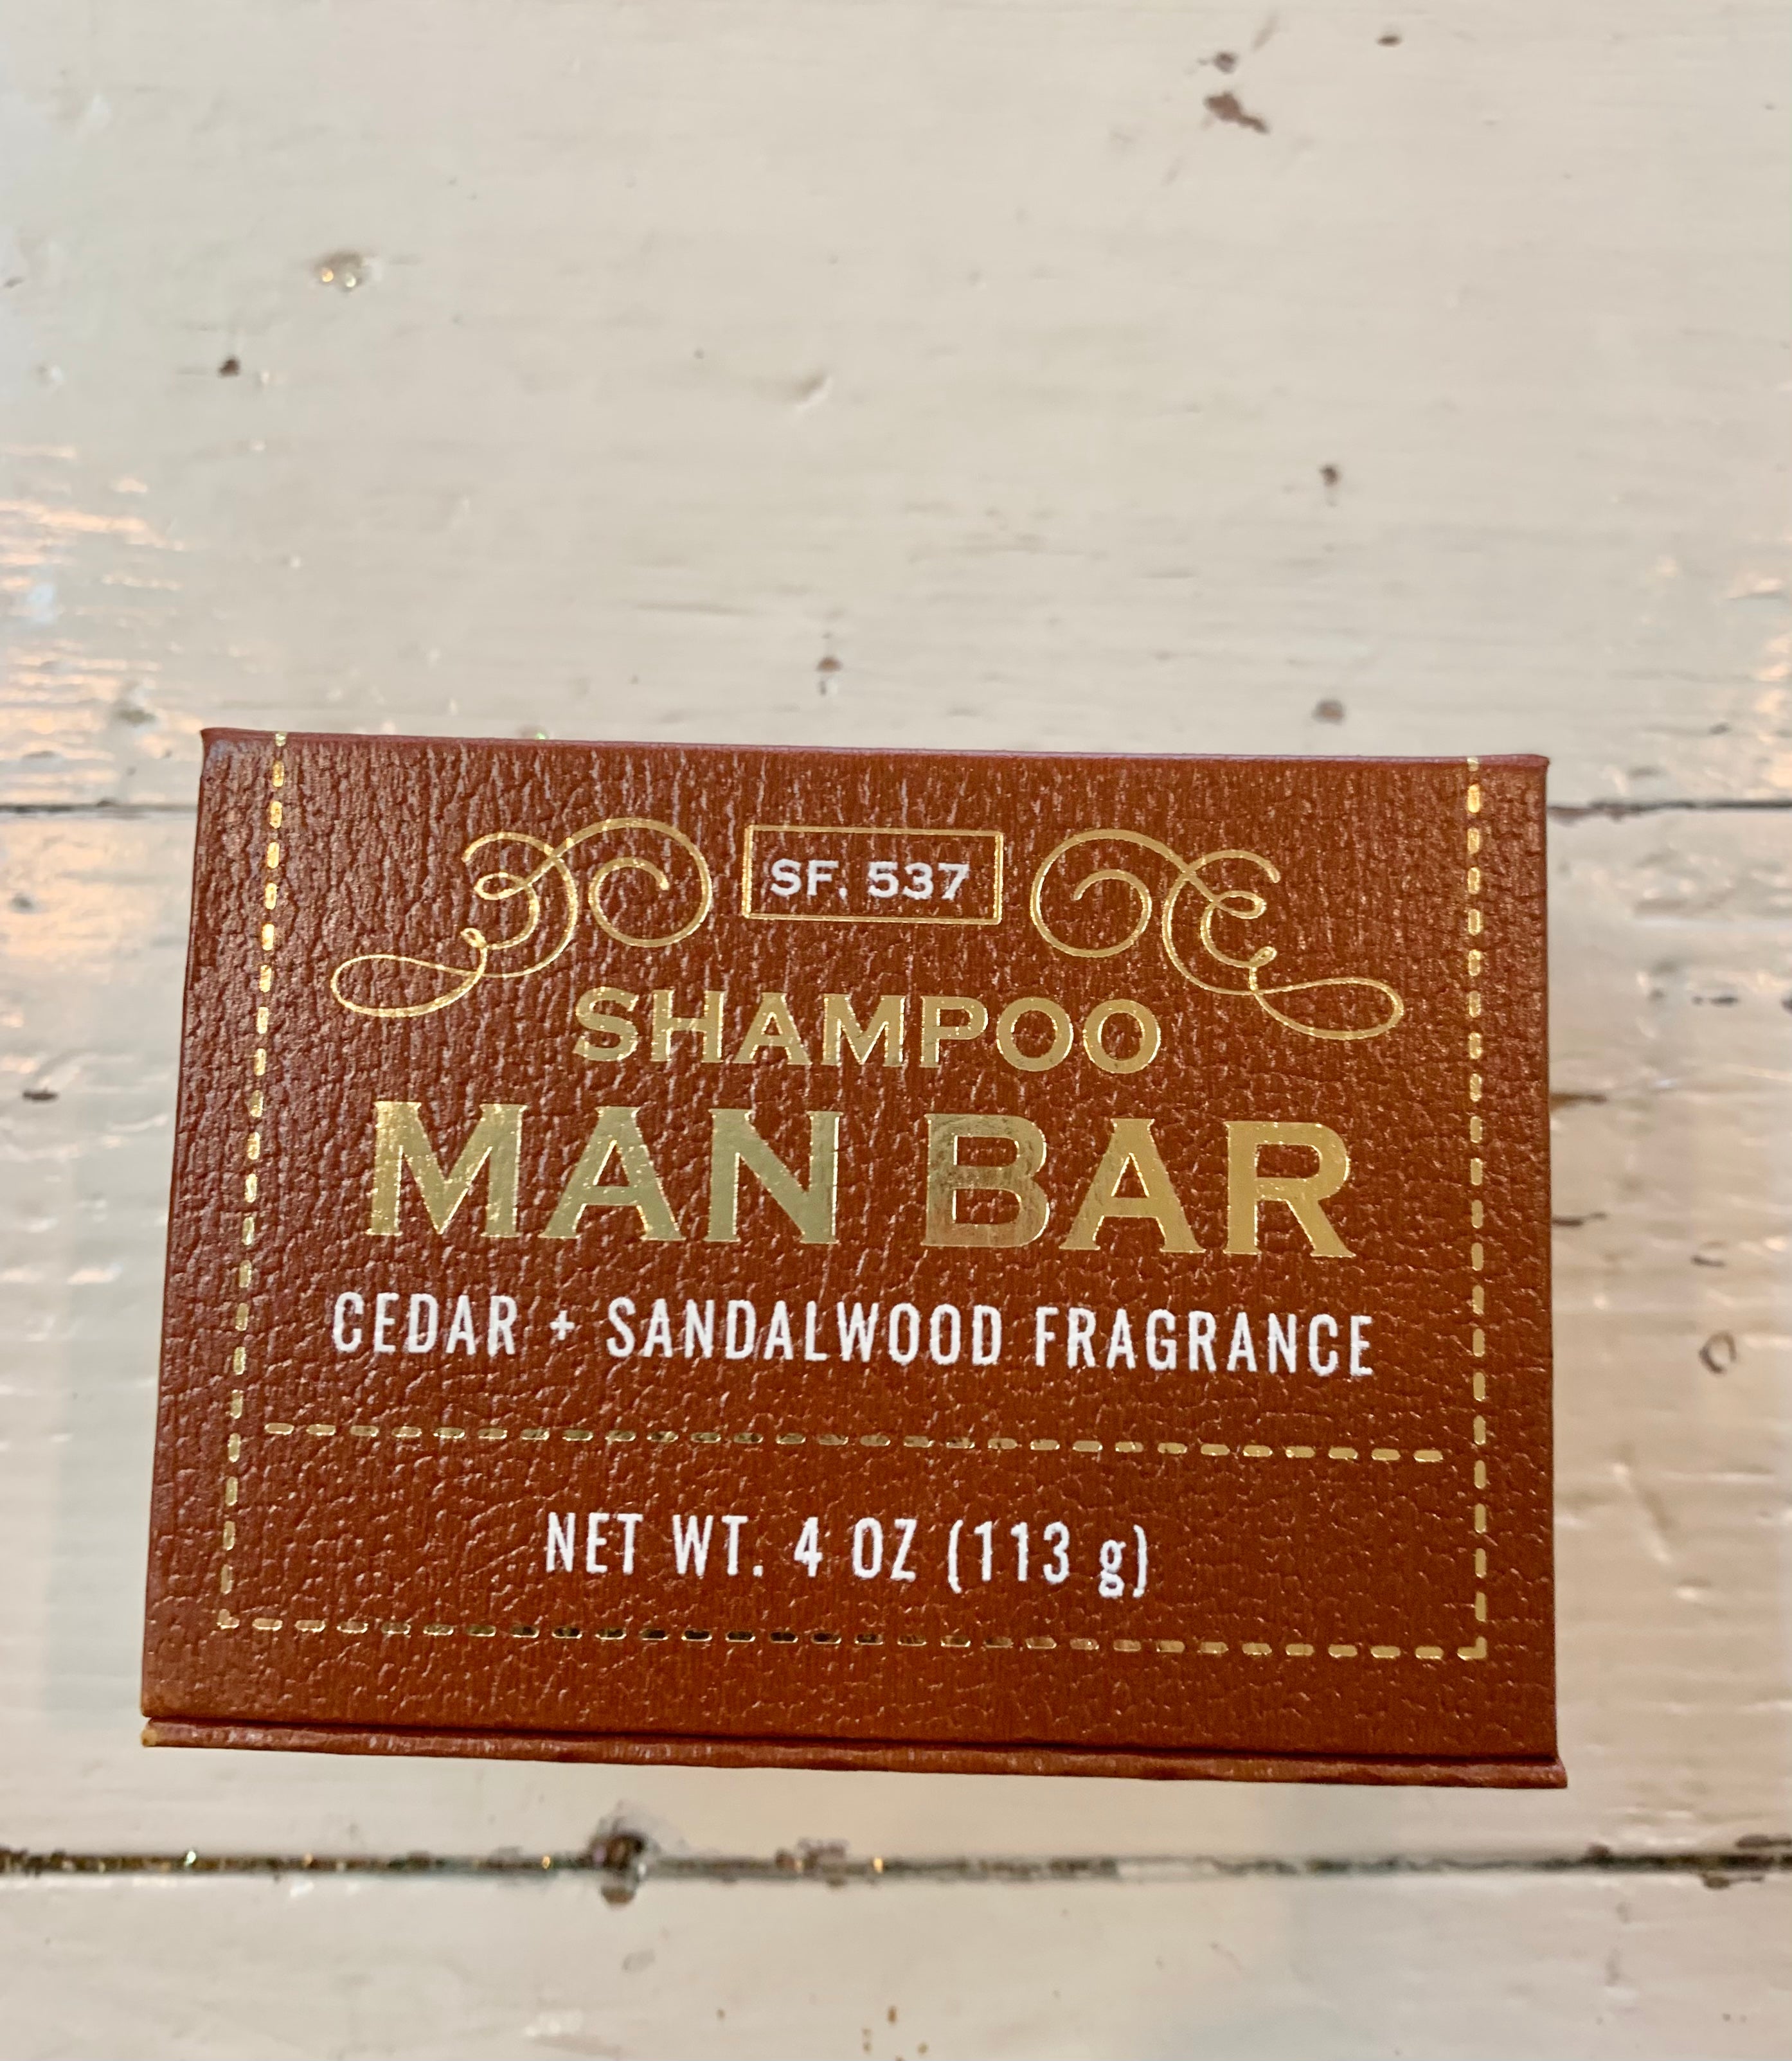 Cedar and Sandalwood Shampoo Man Bar